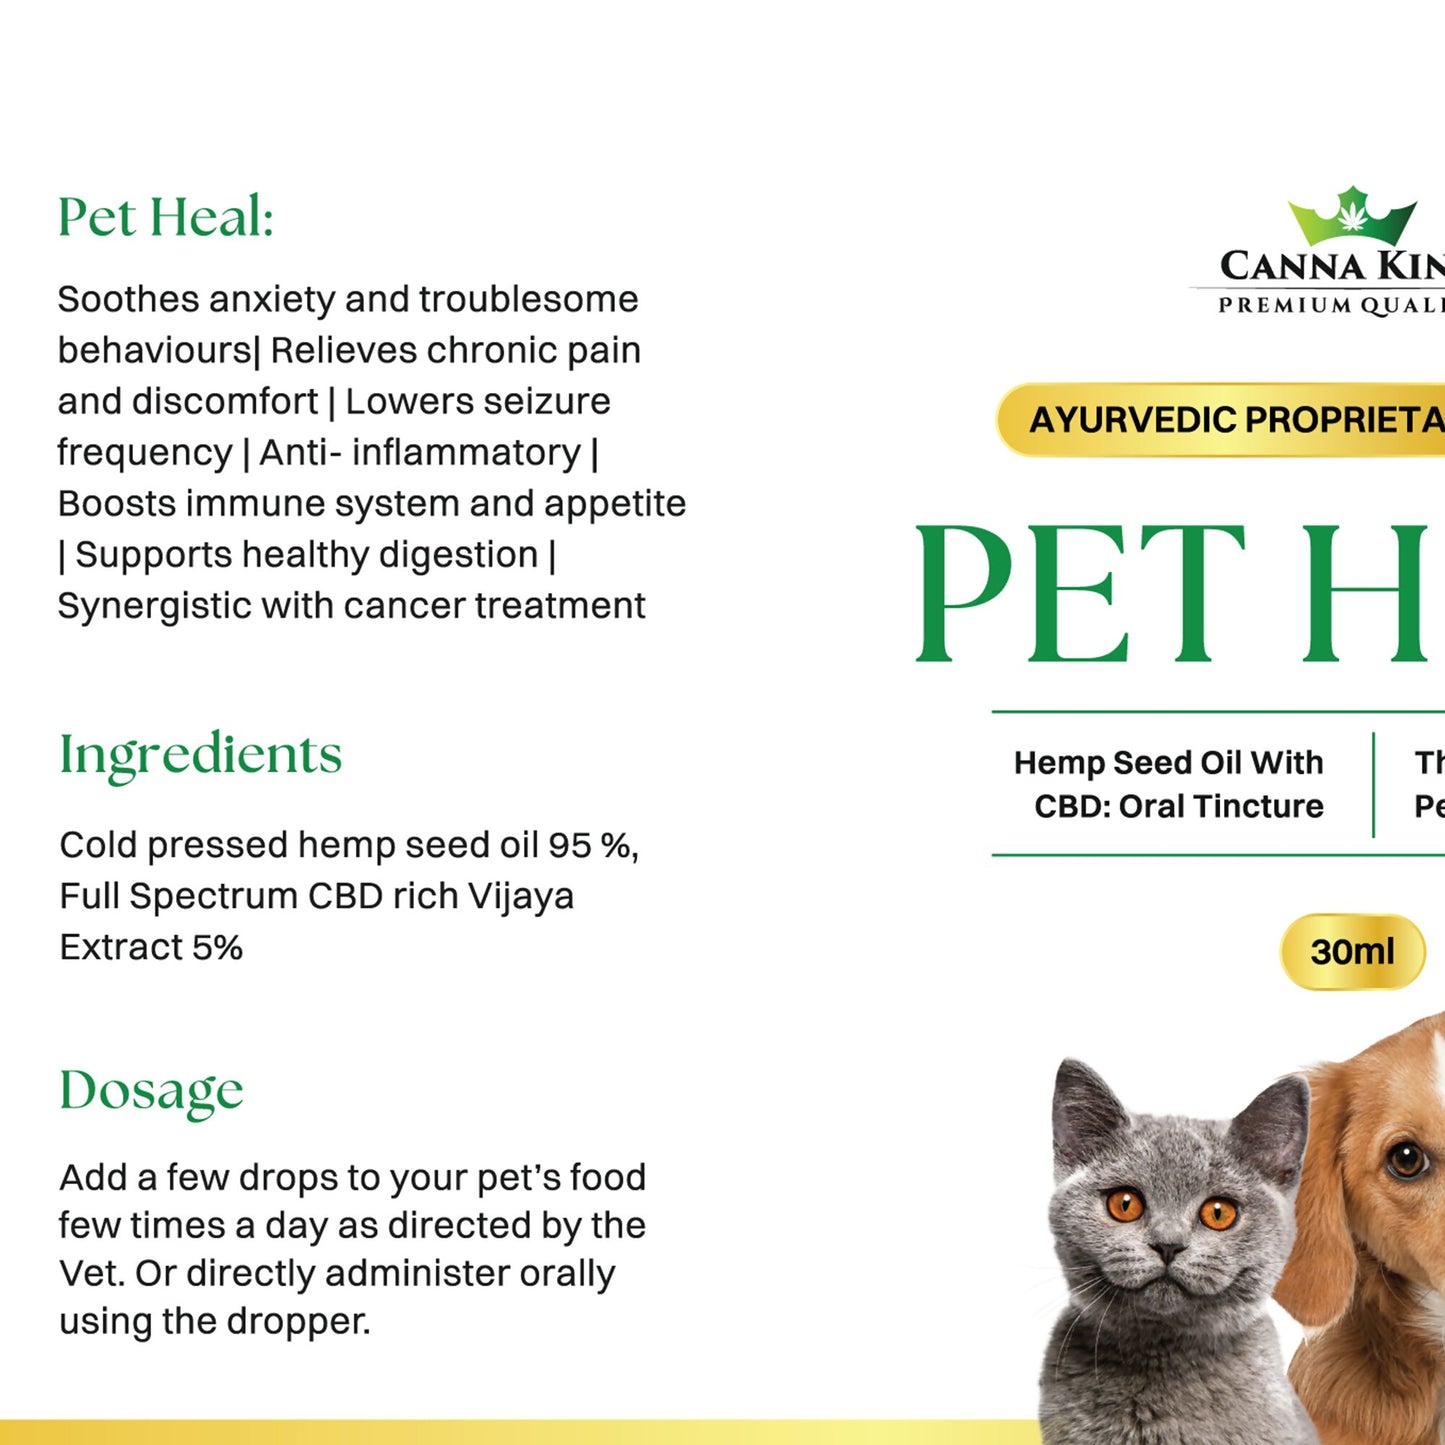 Cannaking - Pet Heal (Oral) - 1500mg (30ml)